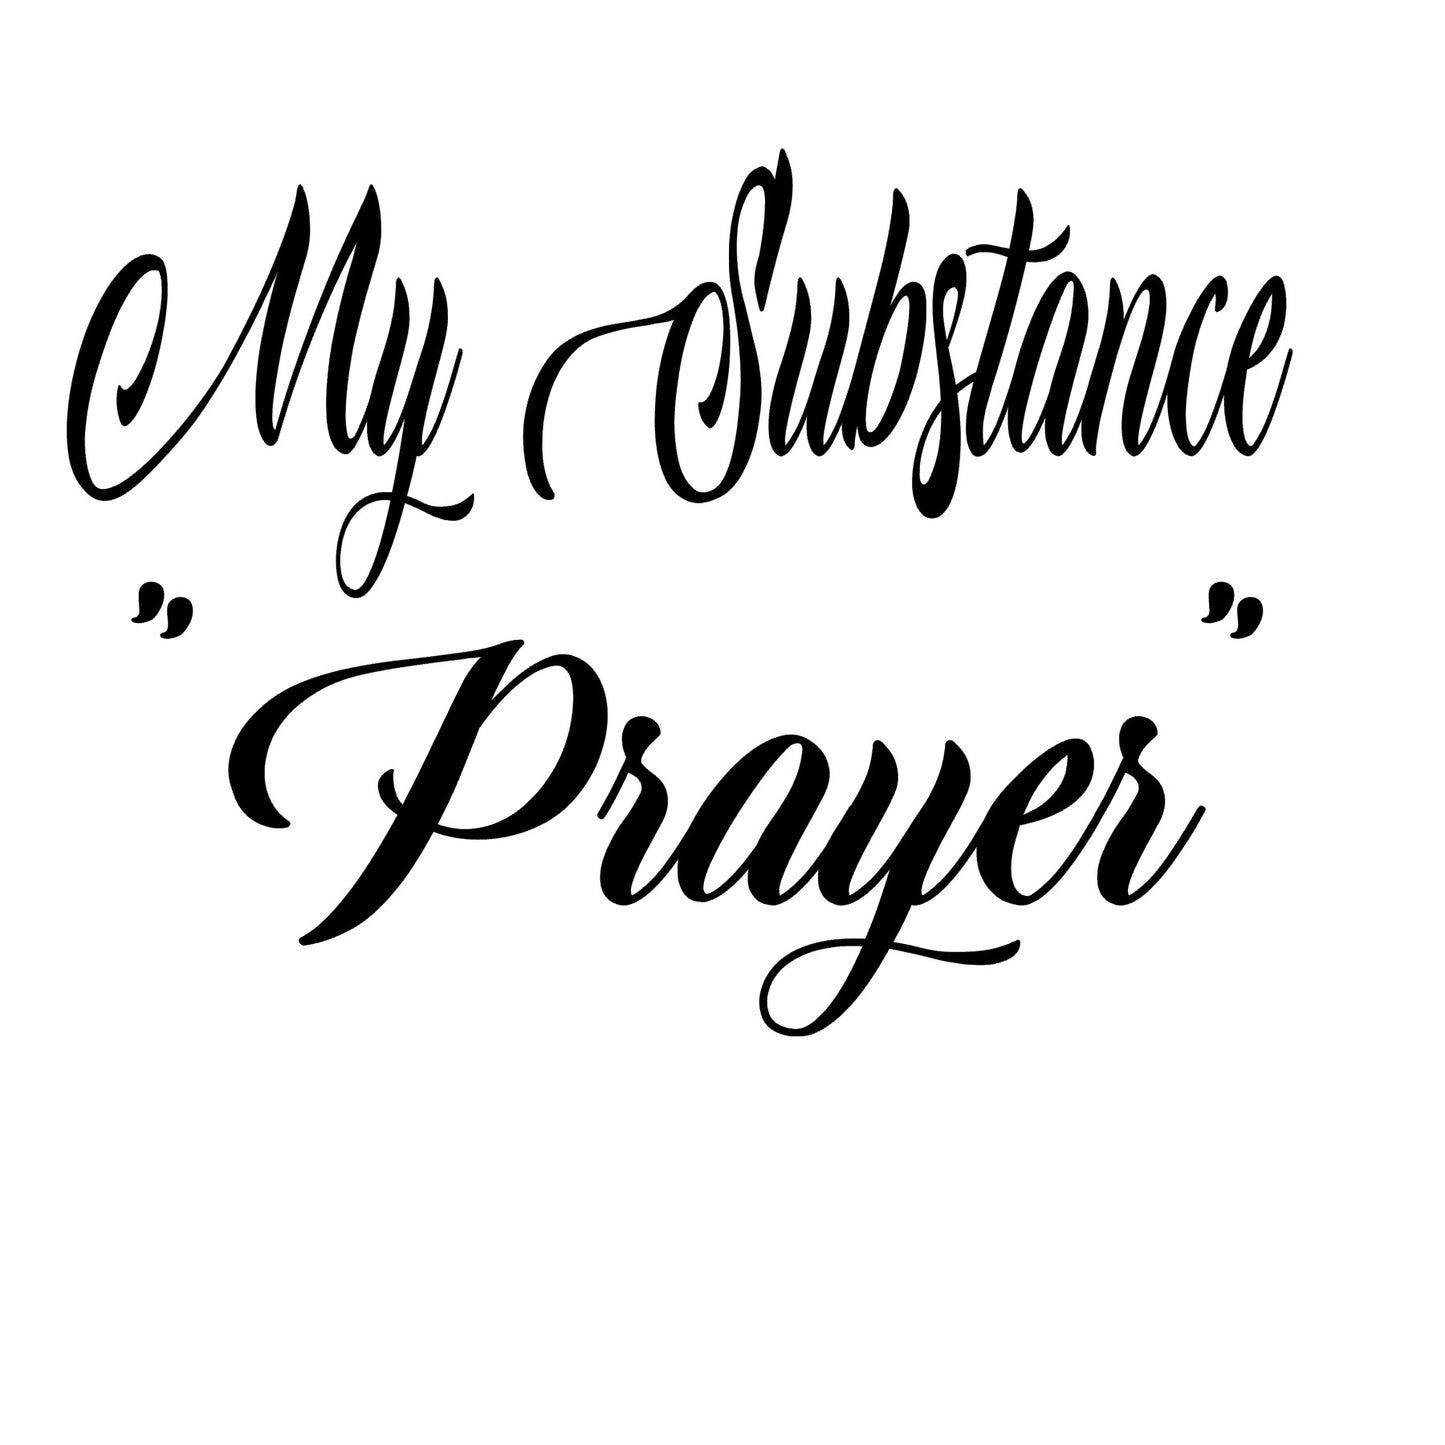 My Substance "Prayer"